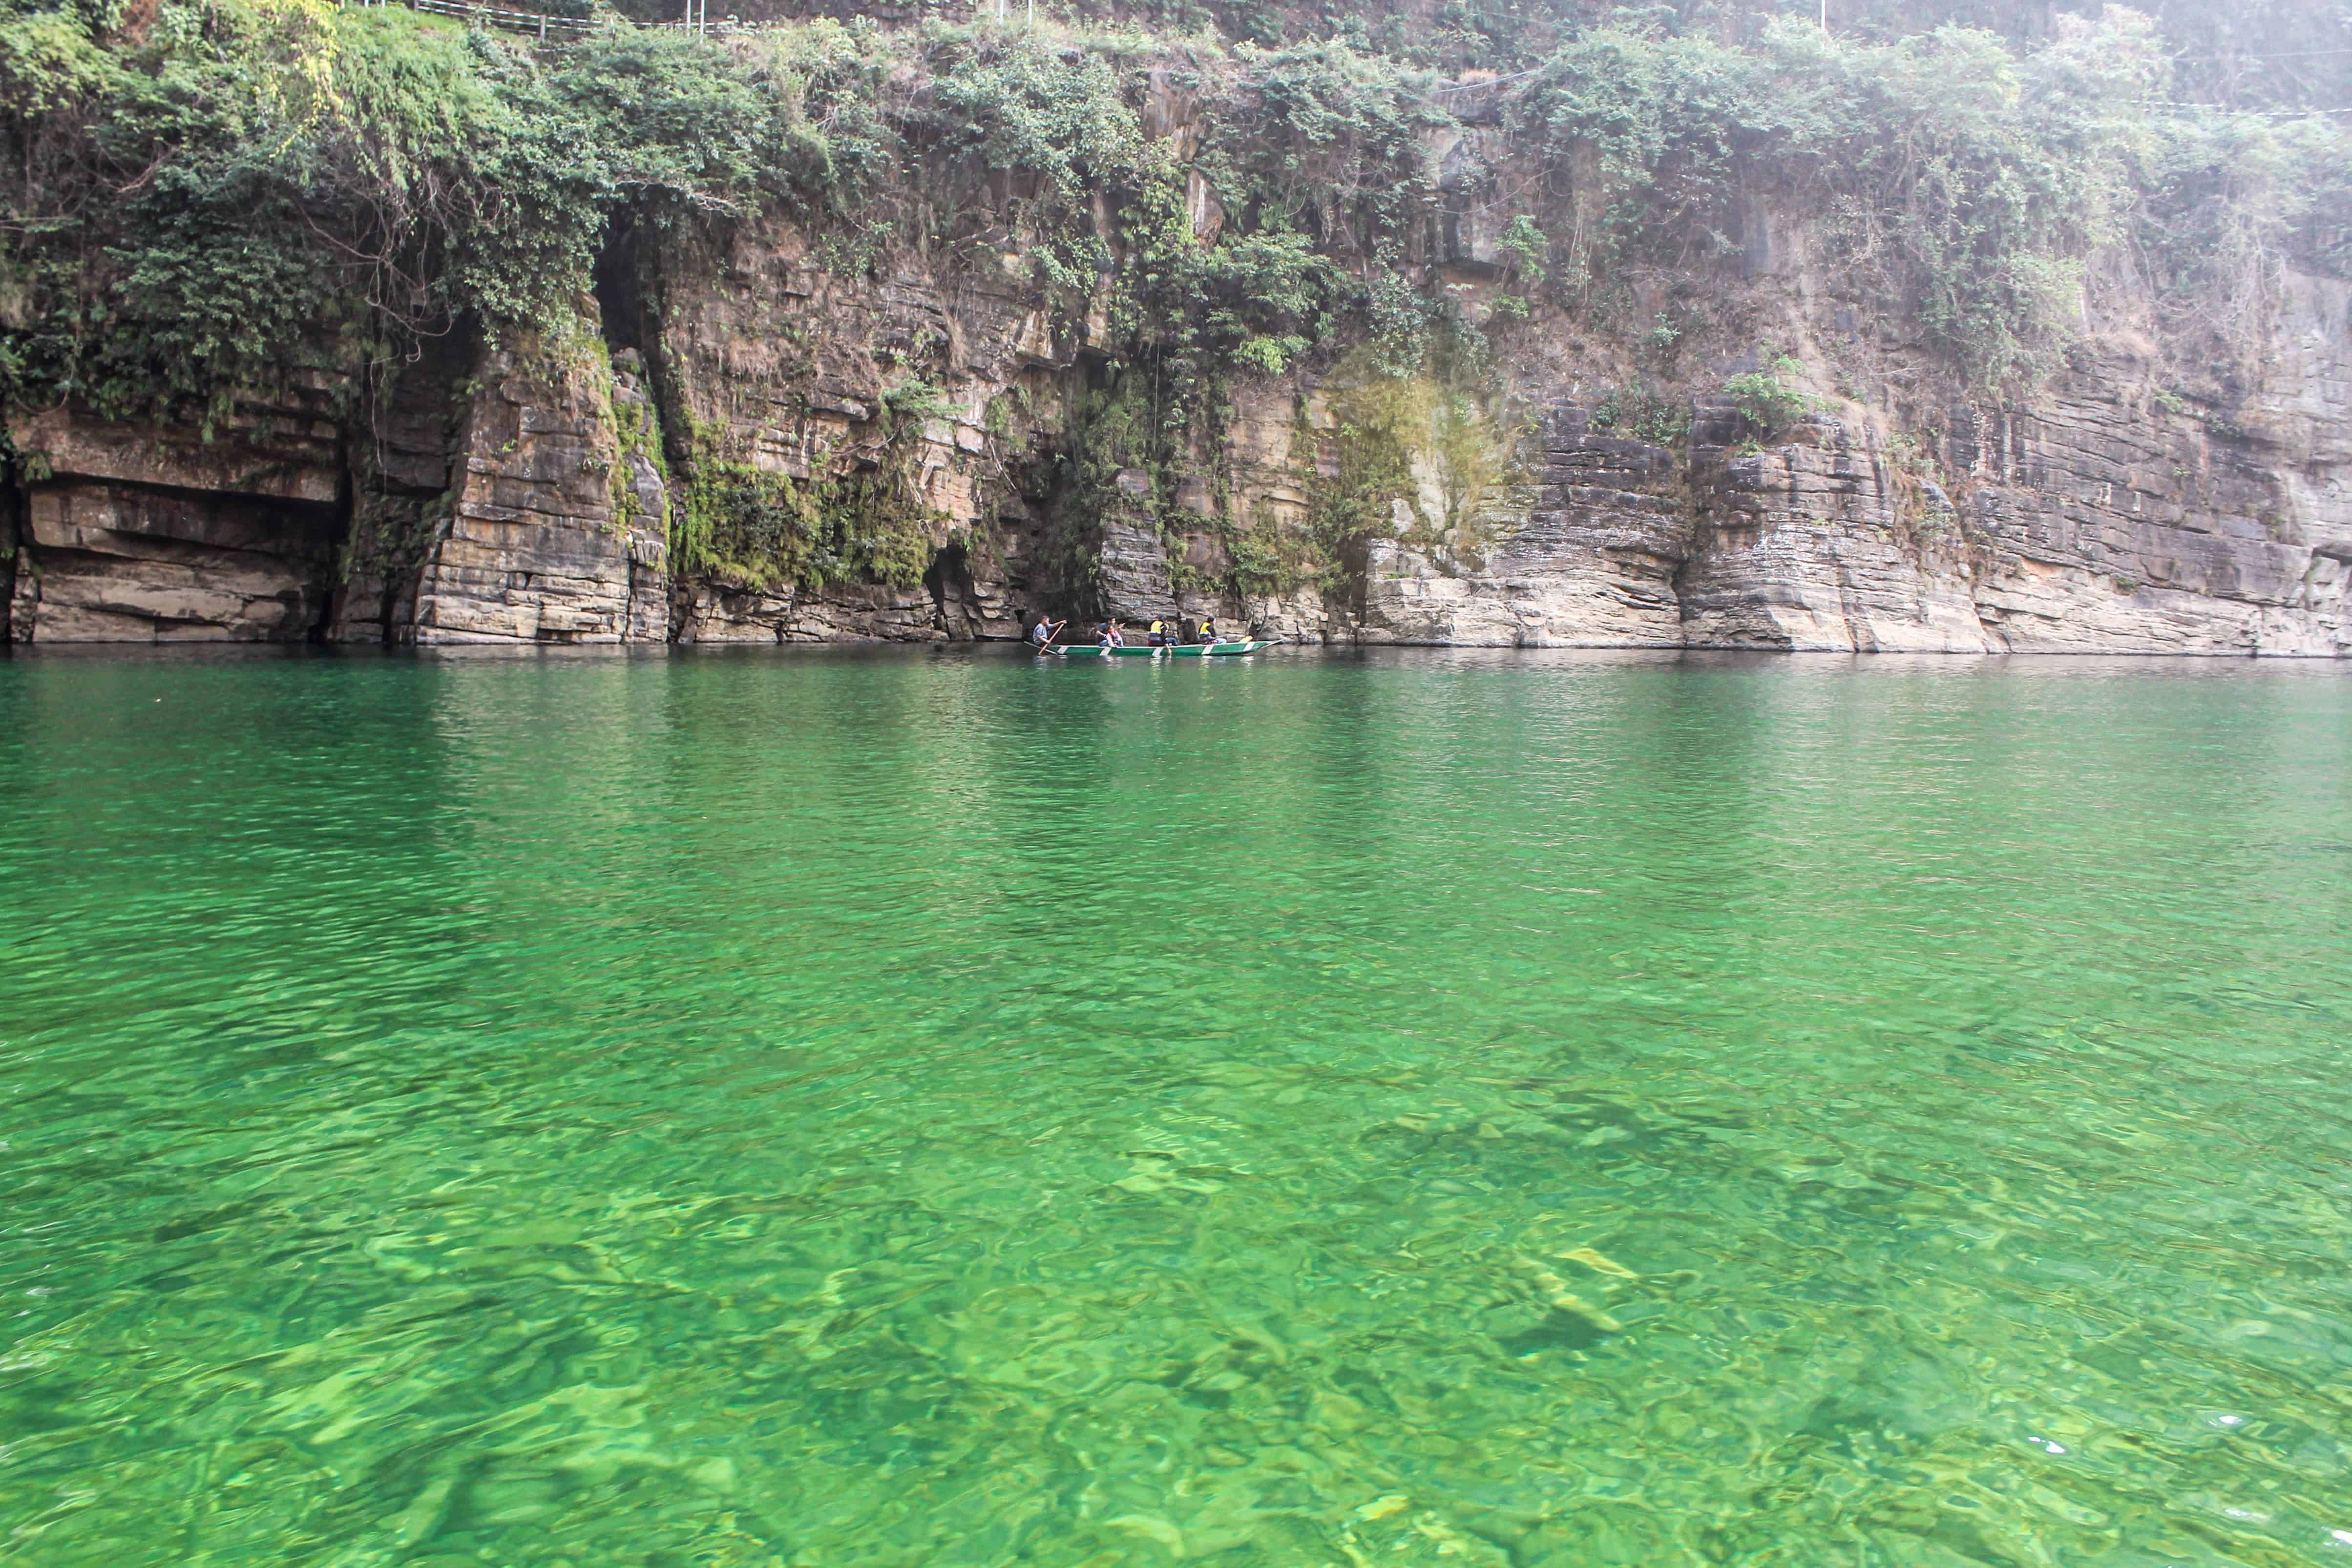 The emerald green river